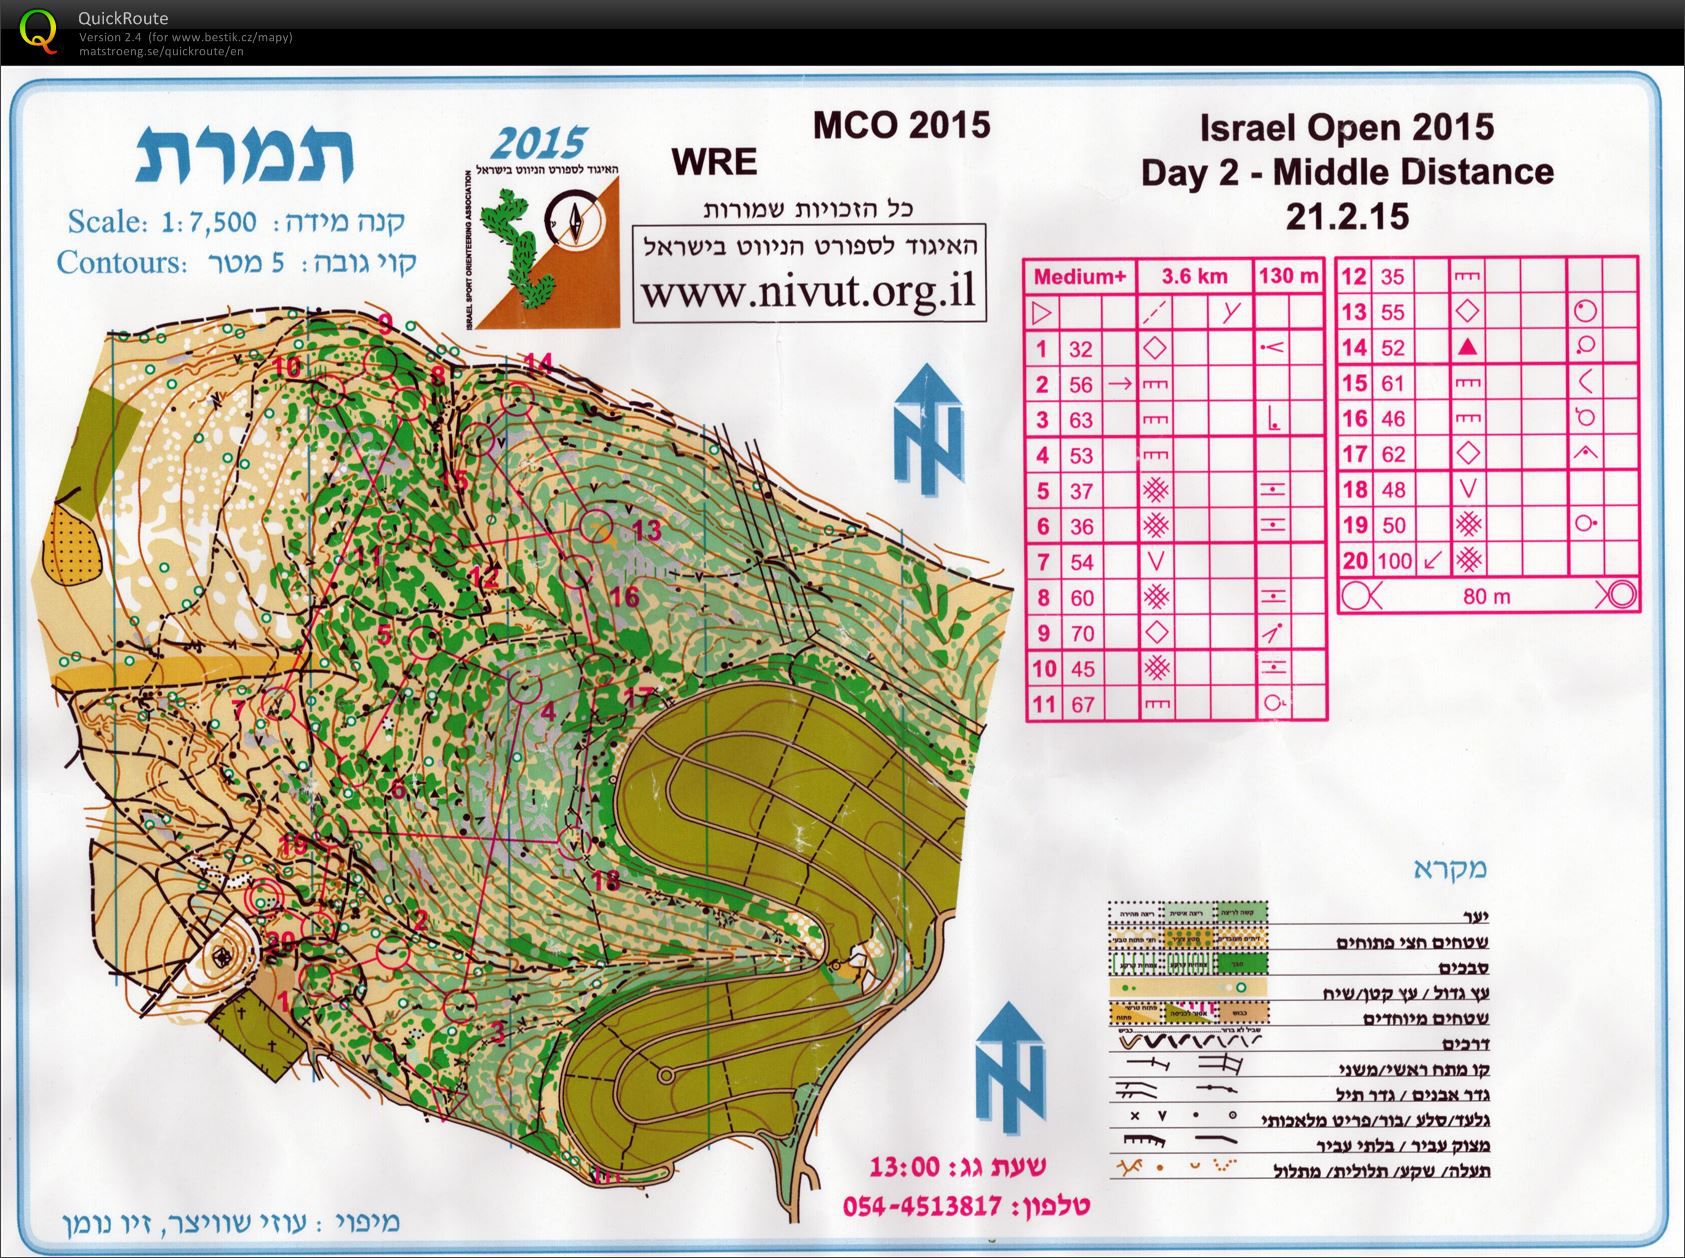 MCO Israel Open 2015 (21.02.2015)